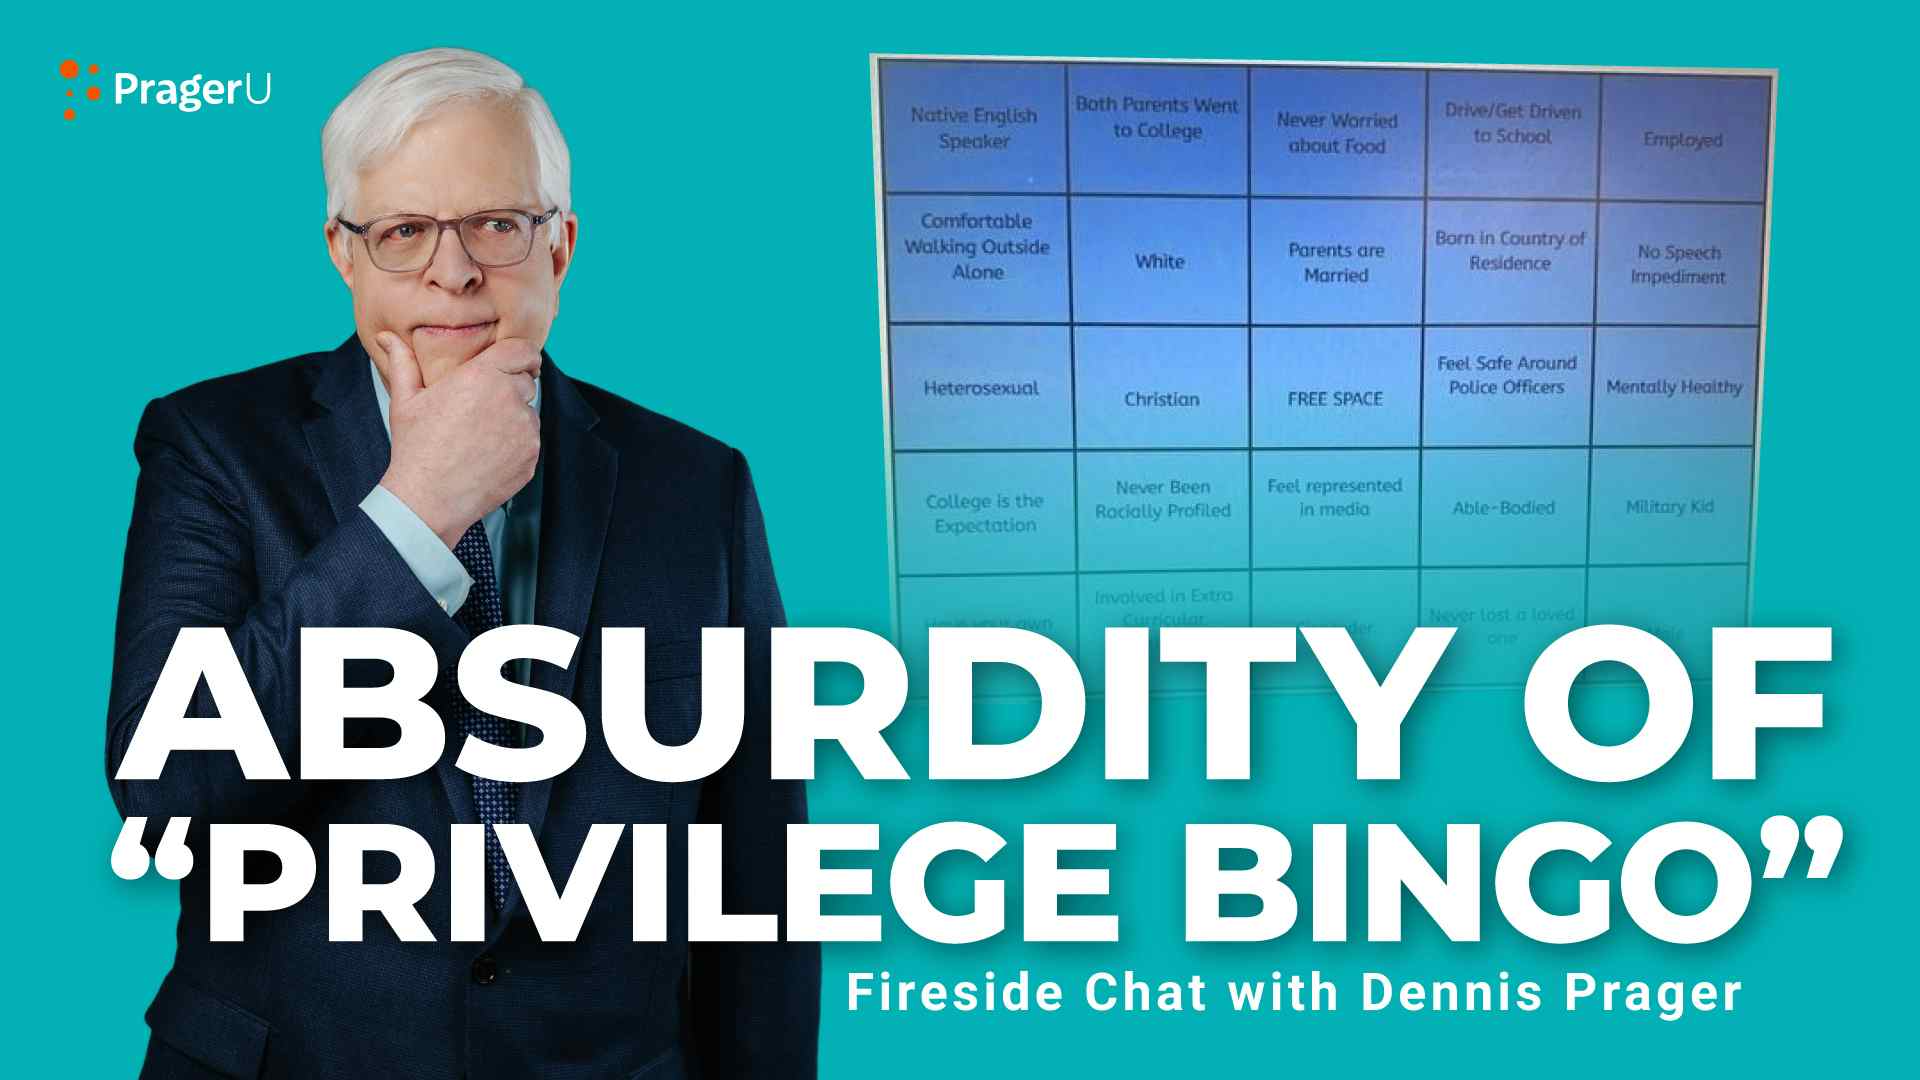 The Absurdity of "Privilege Bingo"